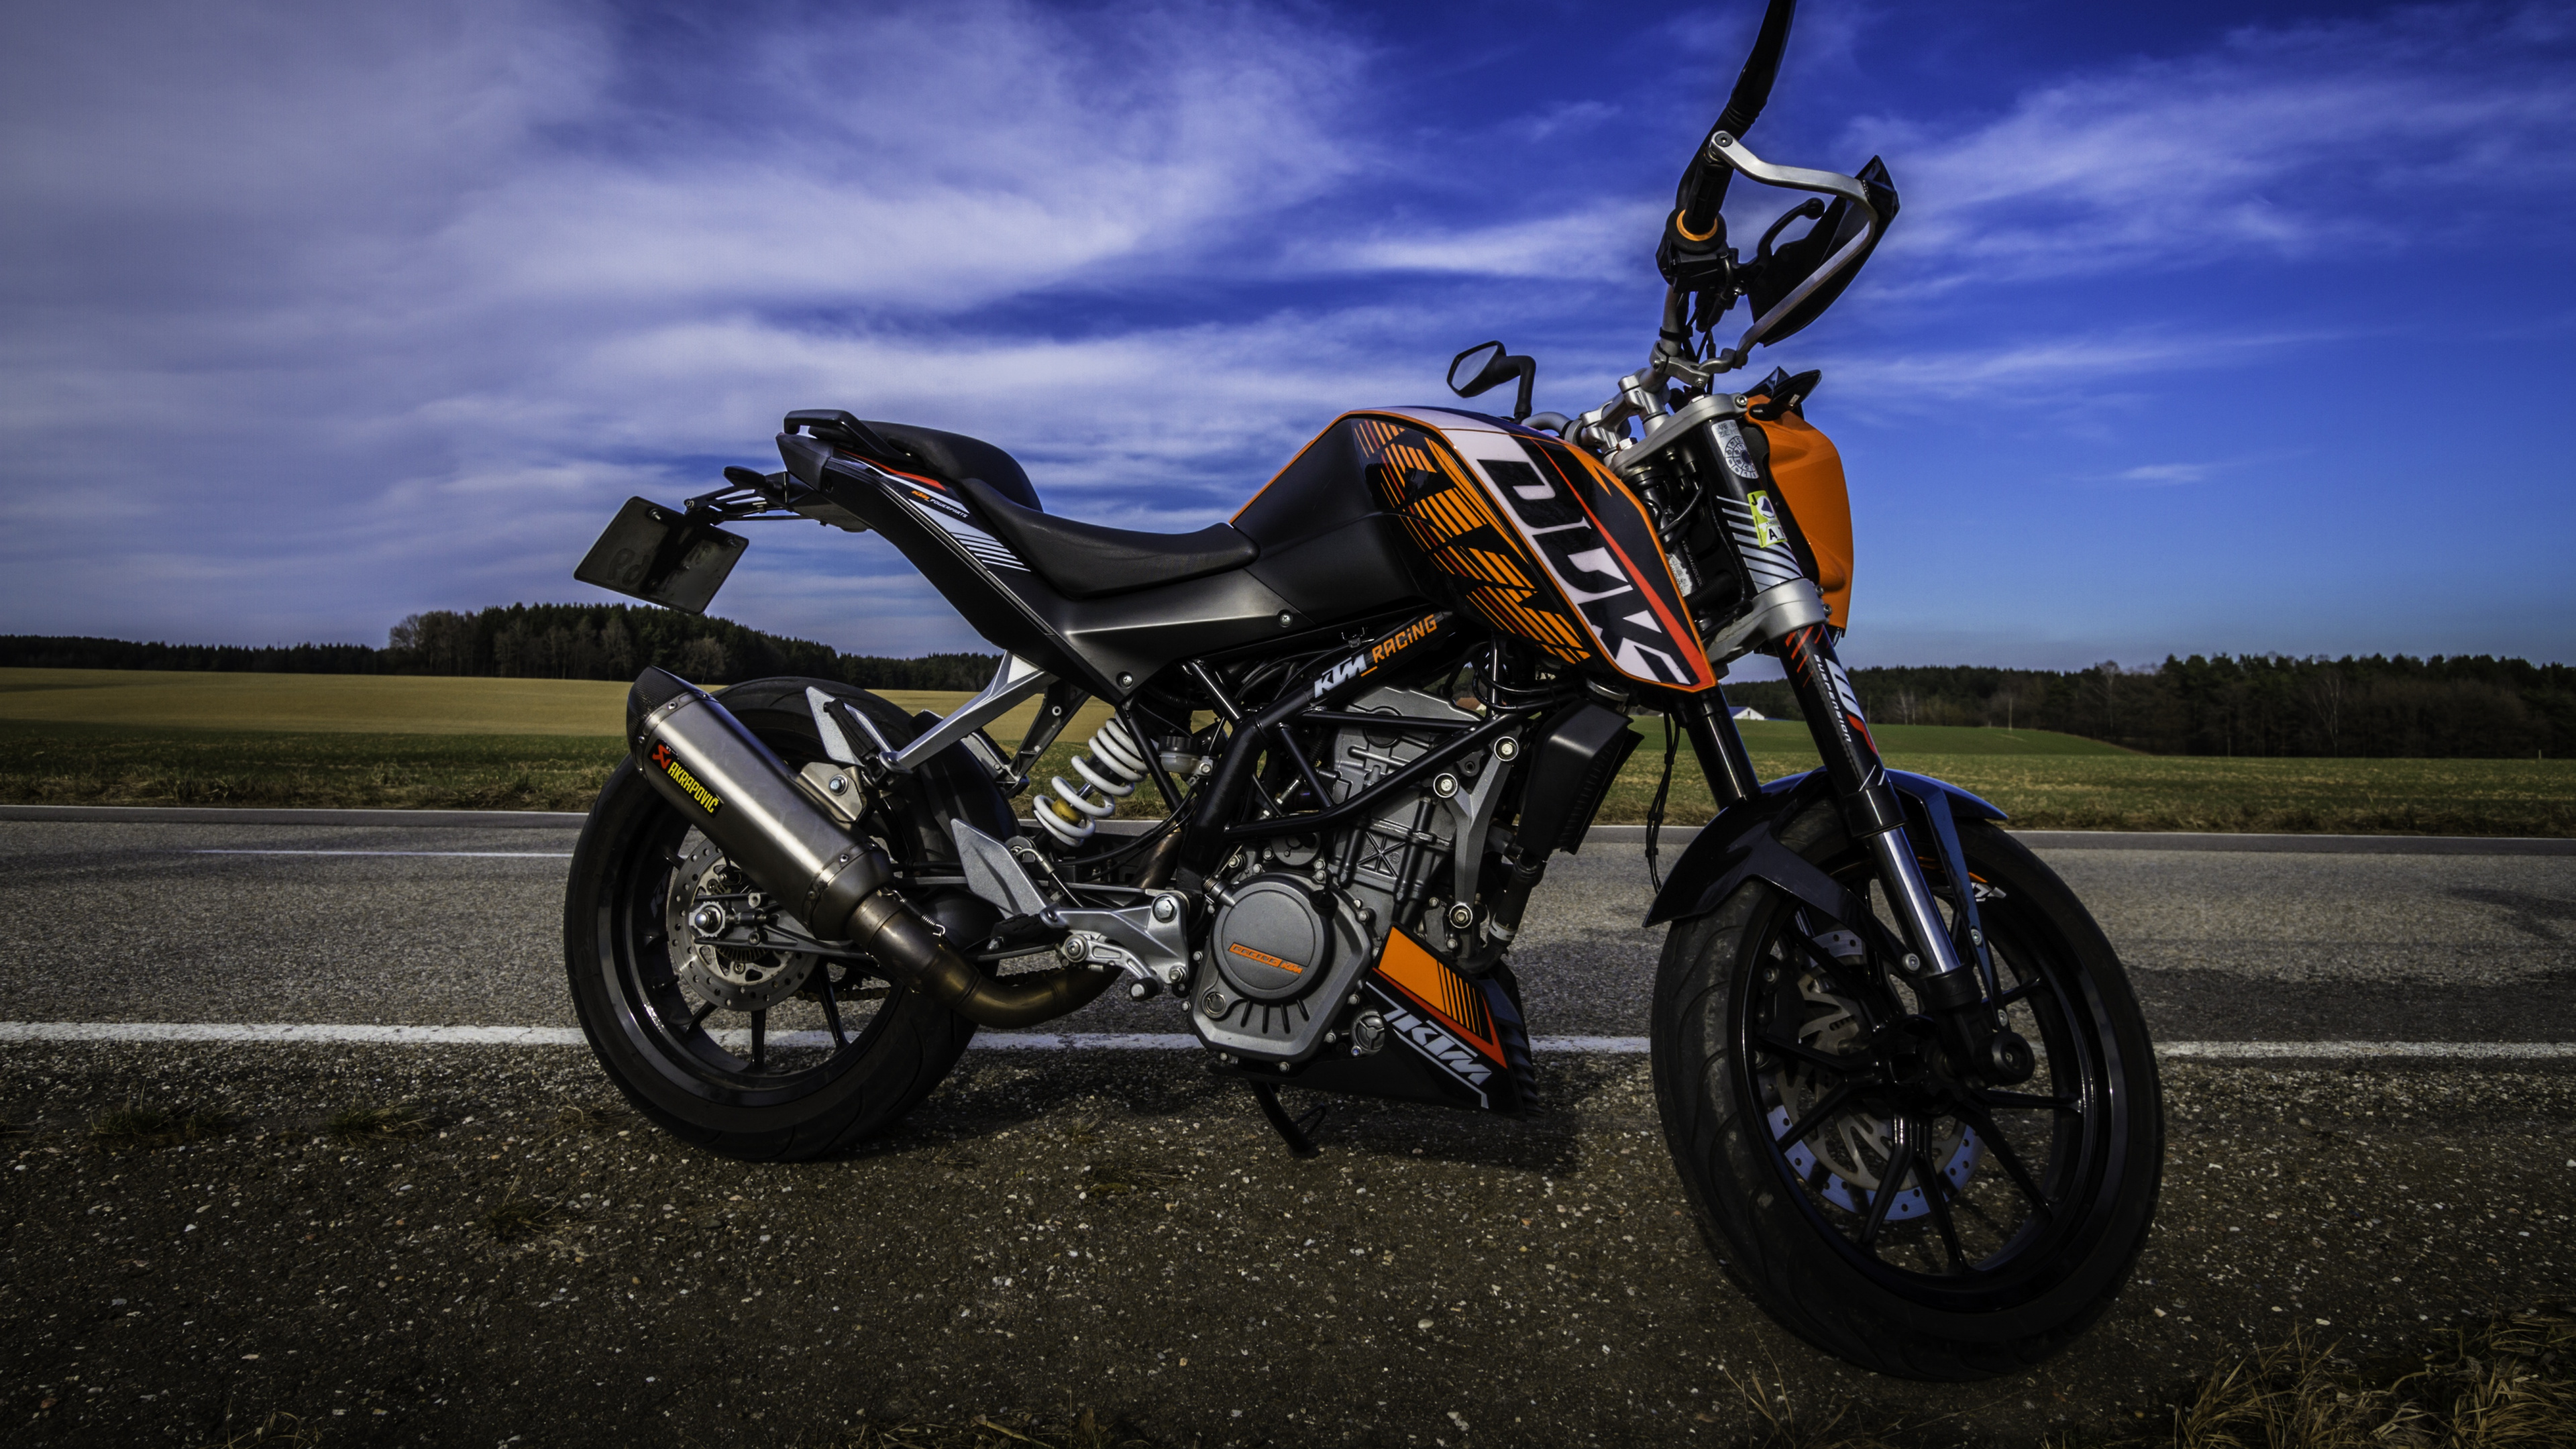 Orange and Black Motorcycle on Black Asphalt Road Under Gray Cloudy Sky. Wallpaper in 3840x2160 Resolution